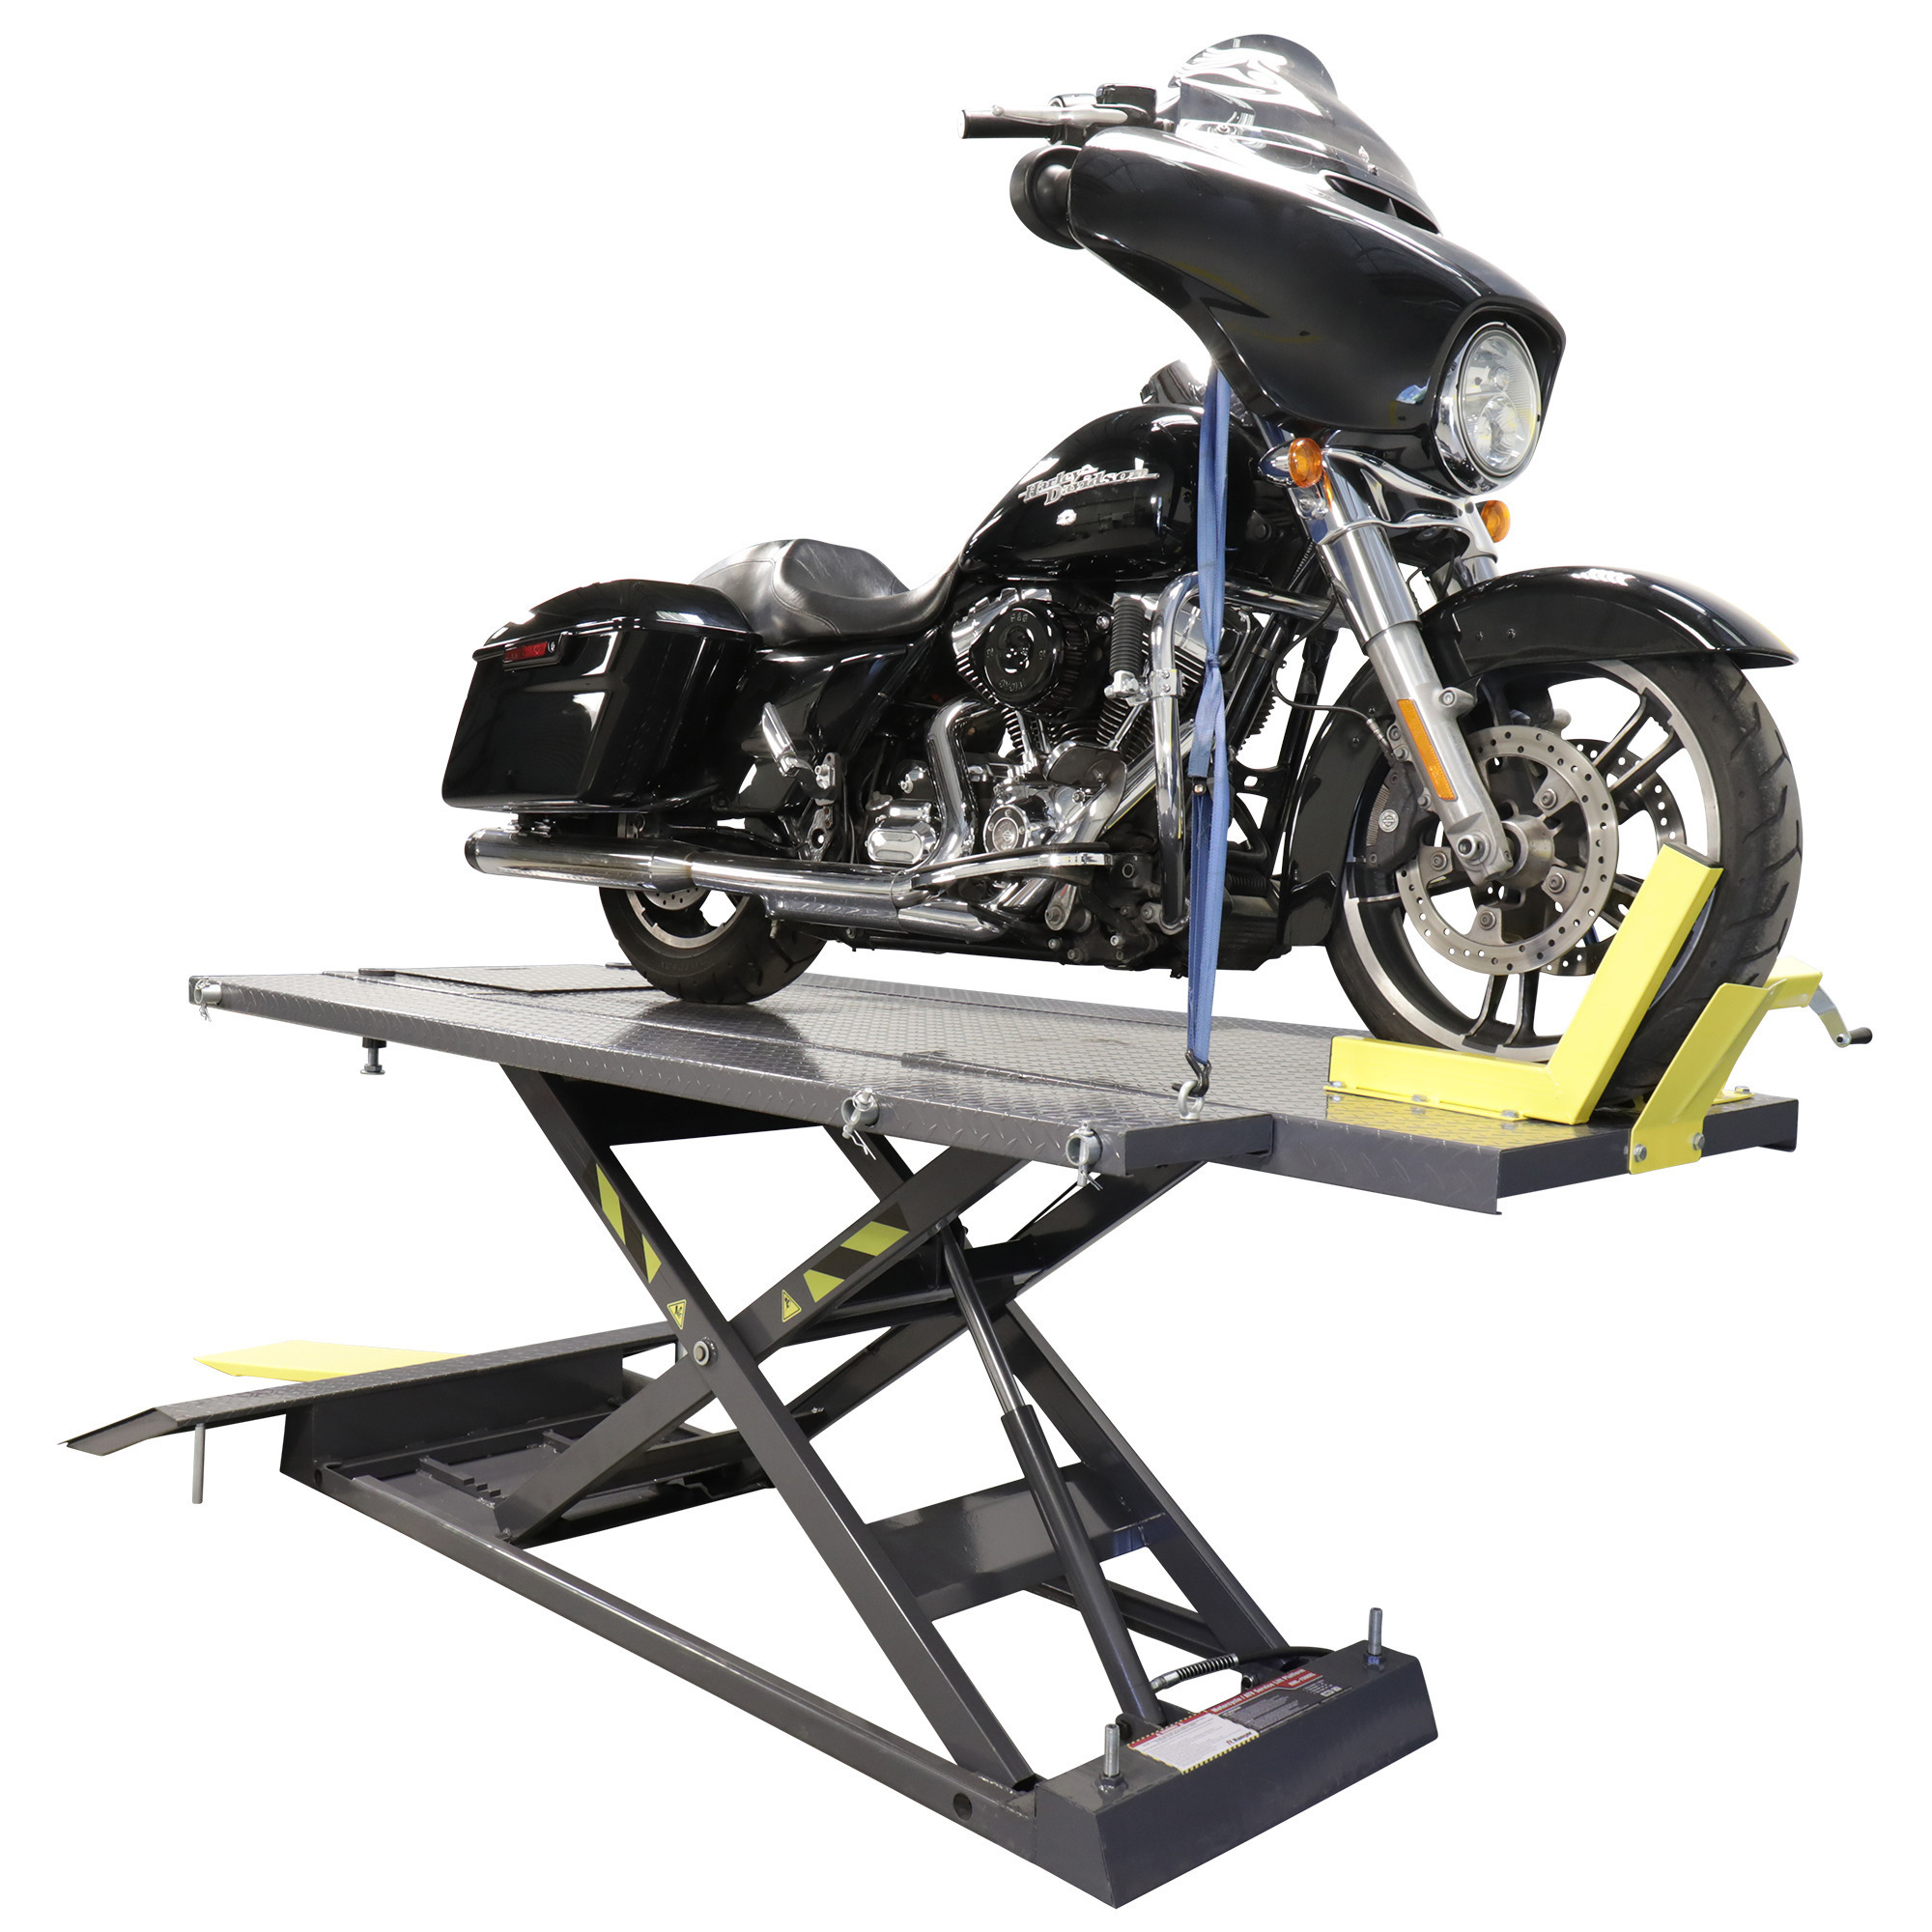 Ranger Deluxe Motorcycle Lift, 1500-lb. Capacity, Model RML-1500XL